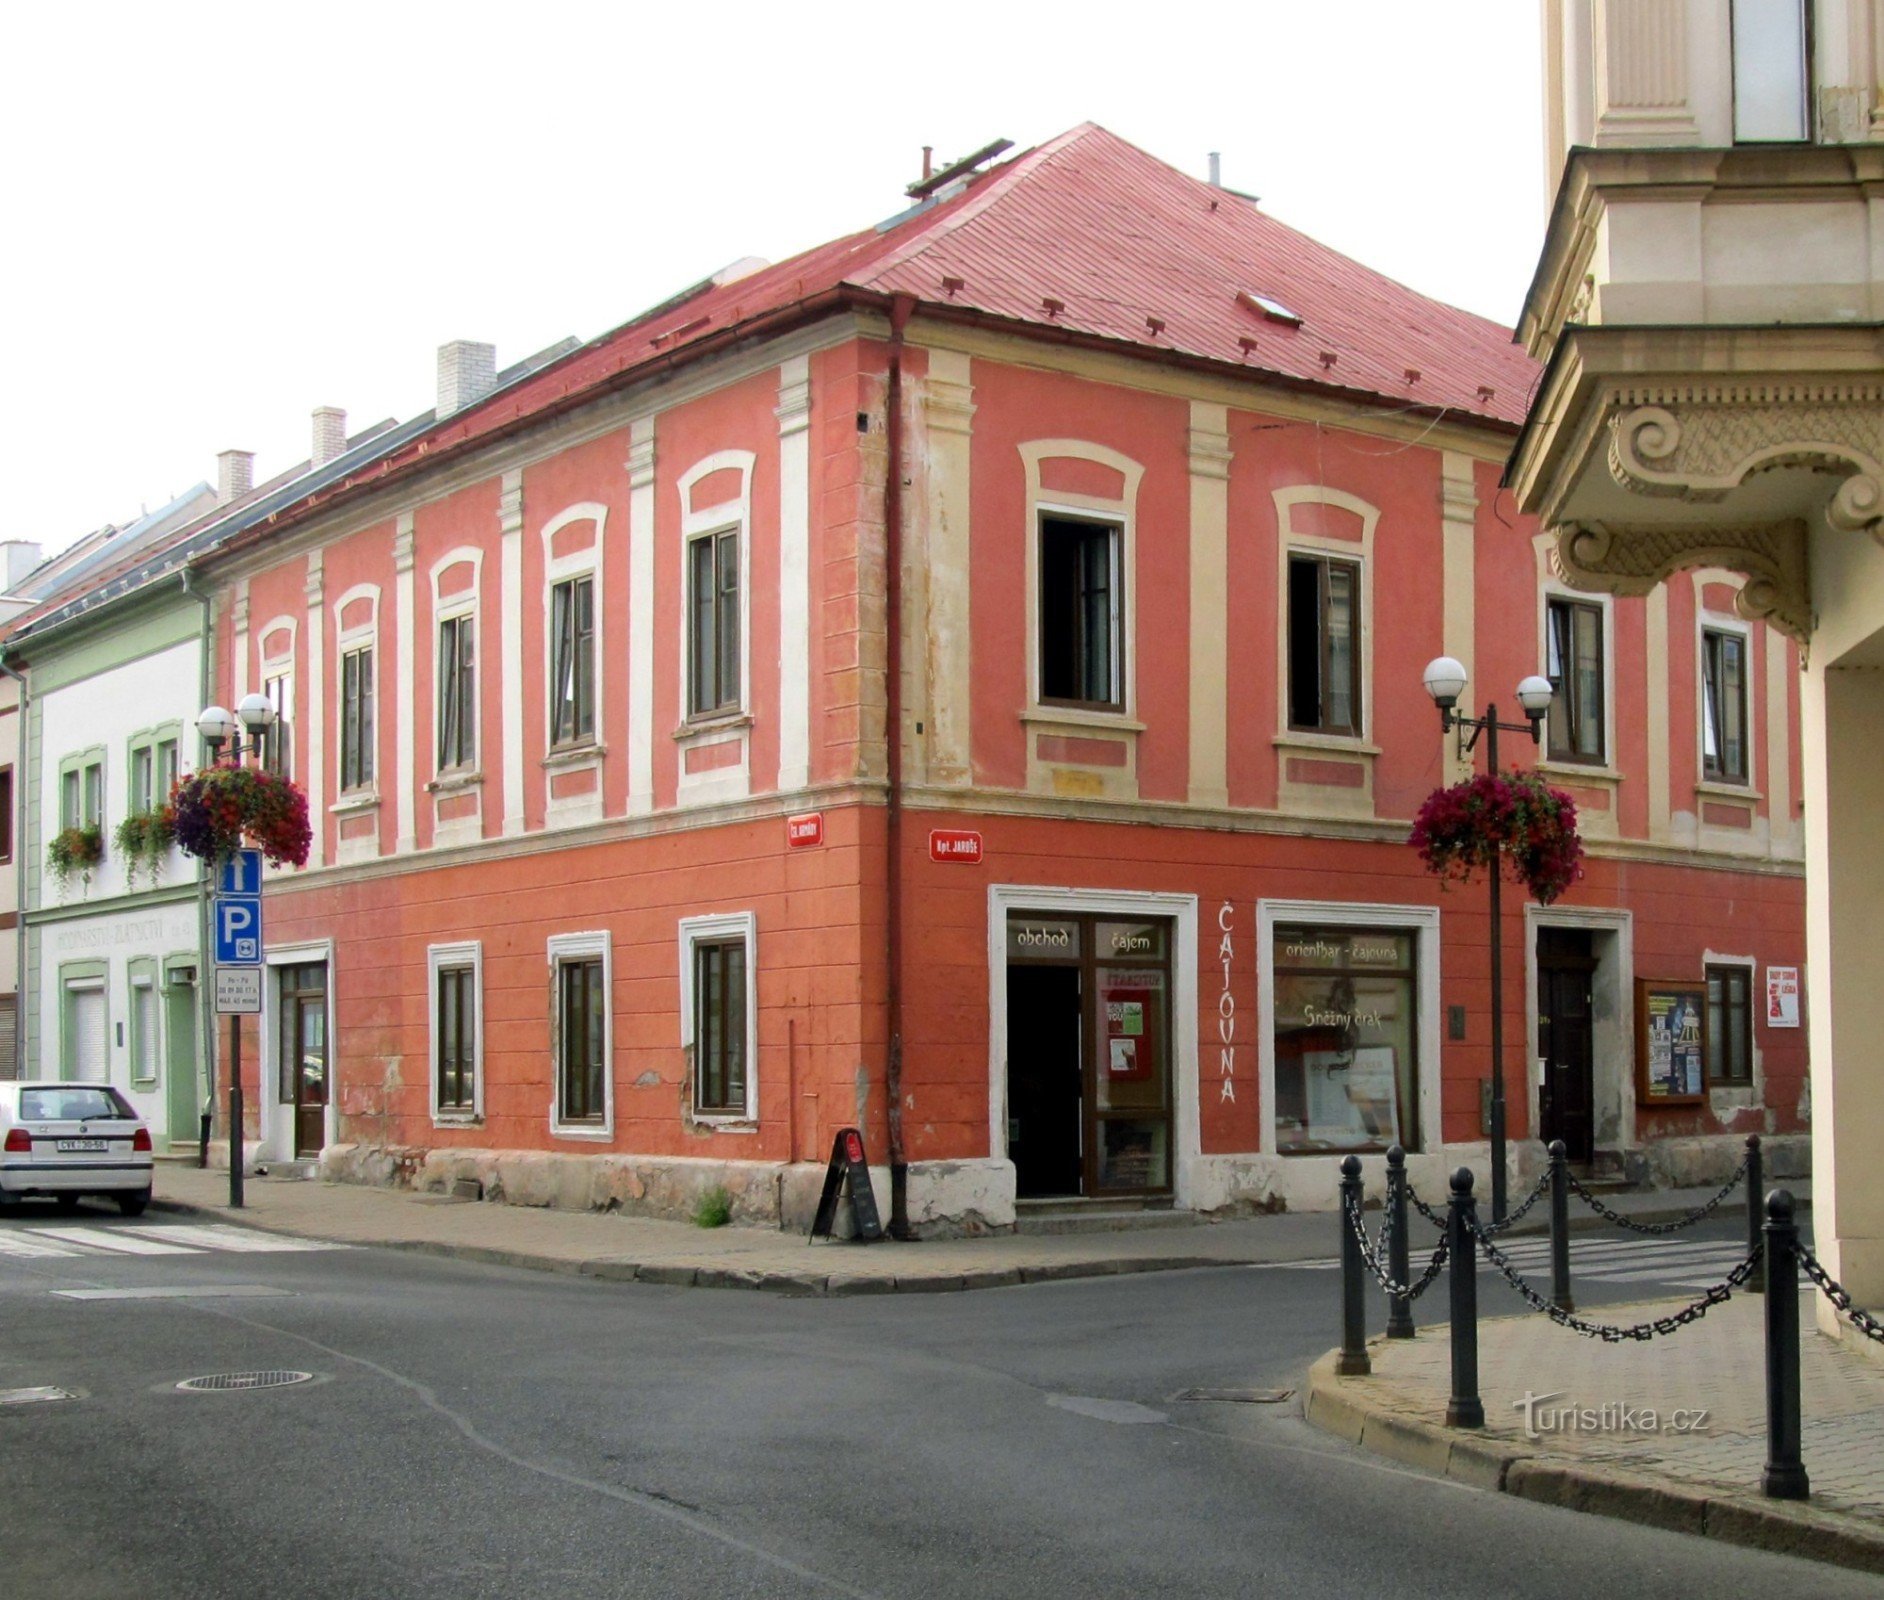 Herbaciarnia Sněžný drak w czerwonym narożnym domu w pobliżu Mírové náměstí w Kadaniu.